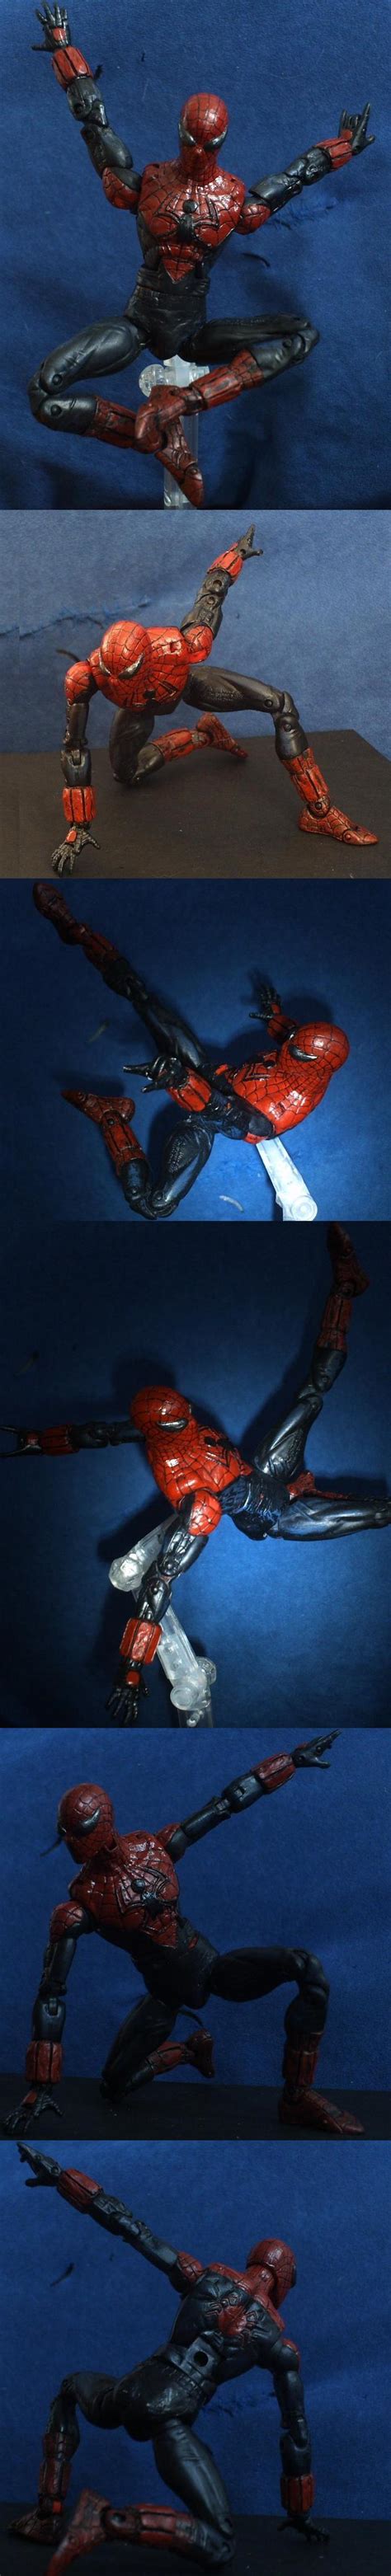 Spider Man Alex Ross Suit By Somethinggerman On Deviantart